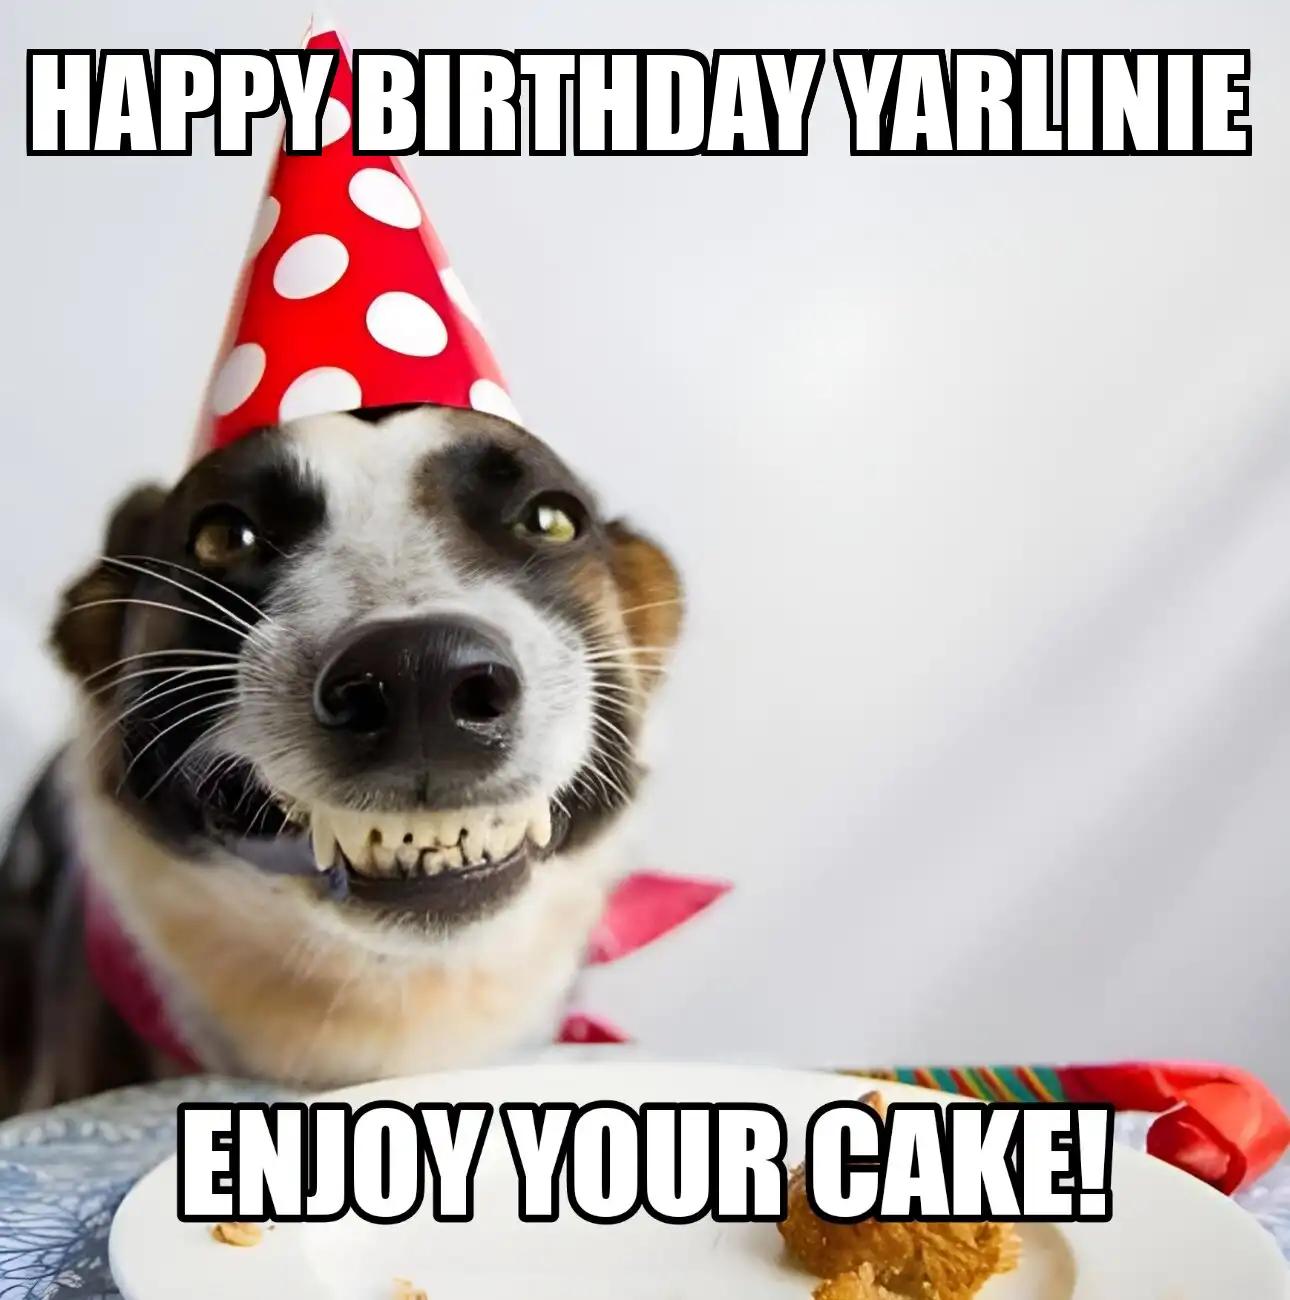 Happy Birthday Yarlinie Enjoy Your Cake Dog Meme